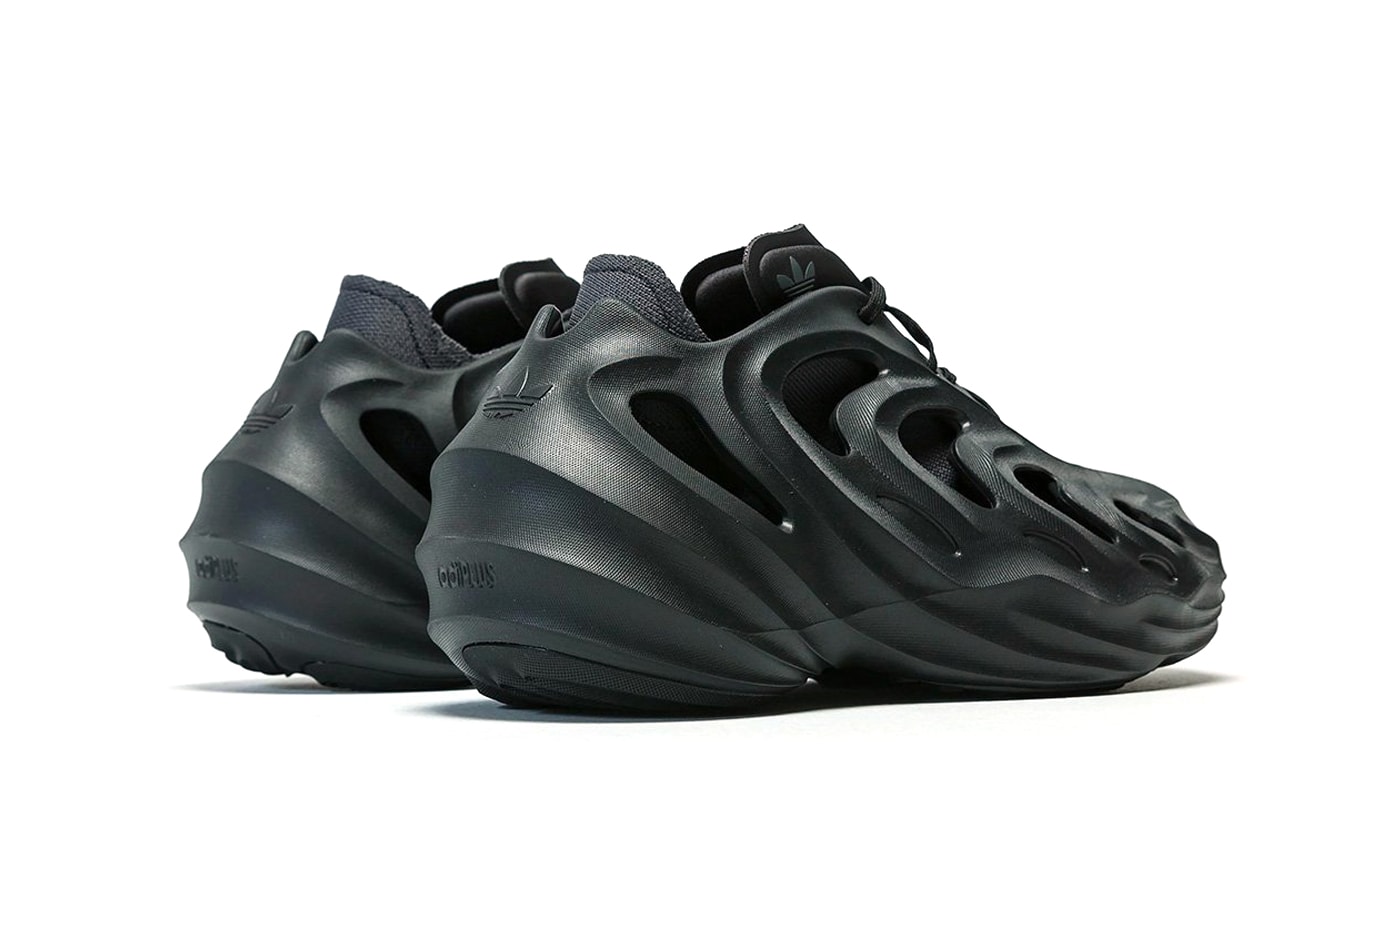 adidas adiFOM Q Black Carbon Wonder White Release Info hp6586 hp6582 Date Buy Price 